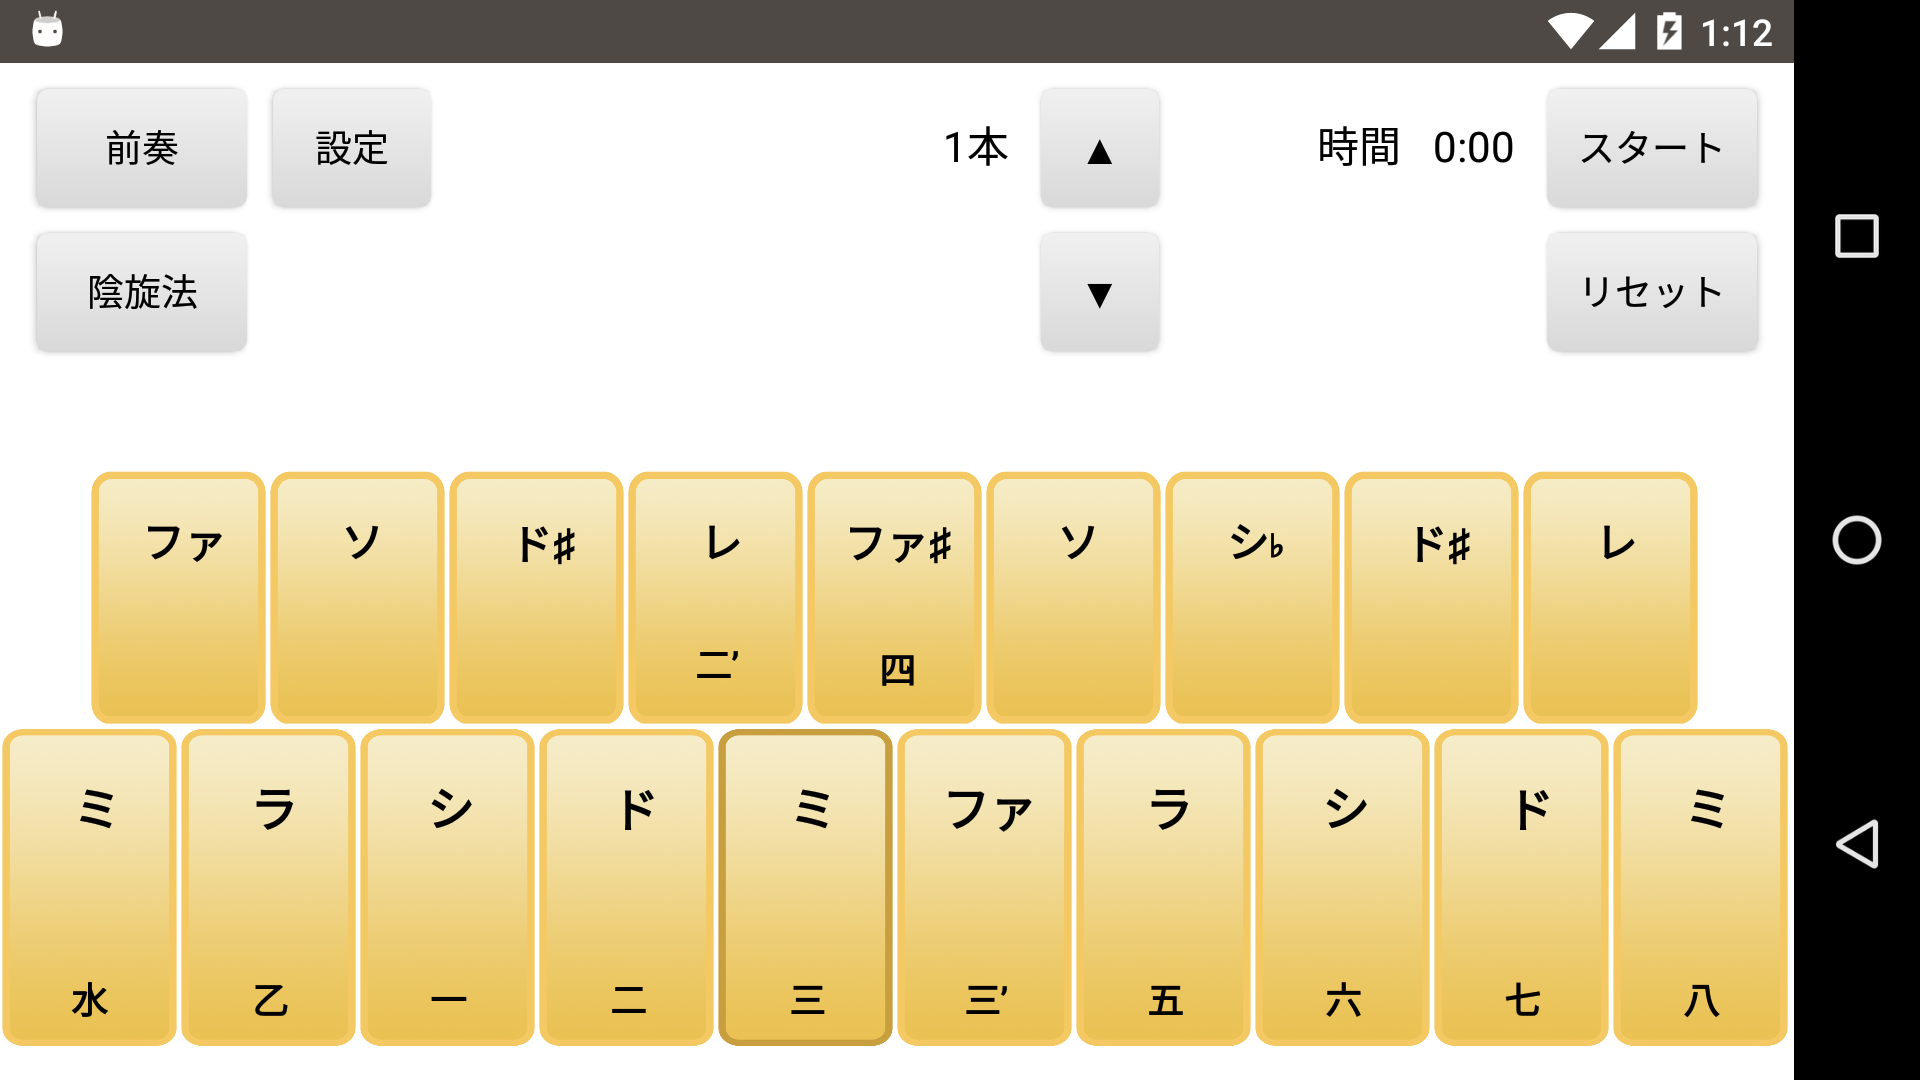 Android application 詩吟トレーナー「吟トレ」 screenshort